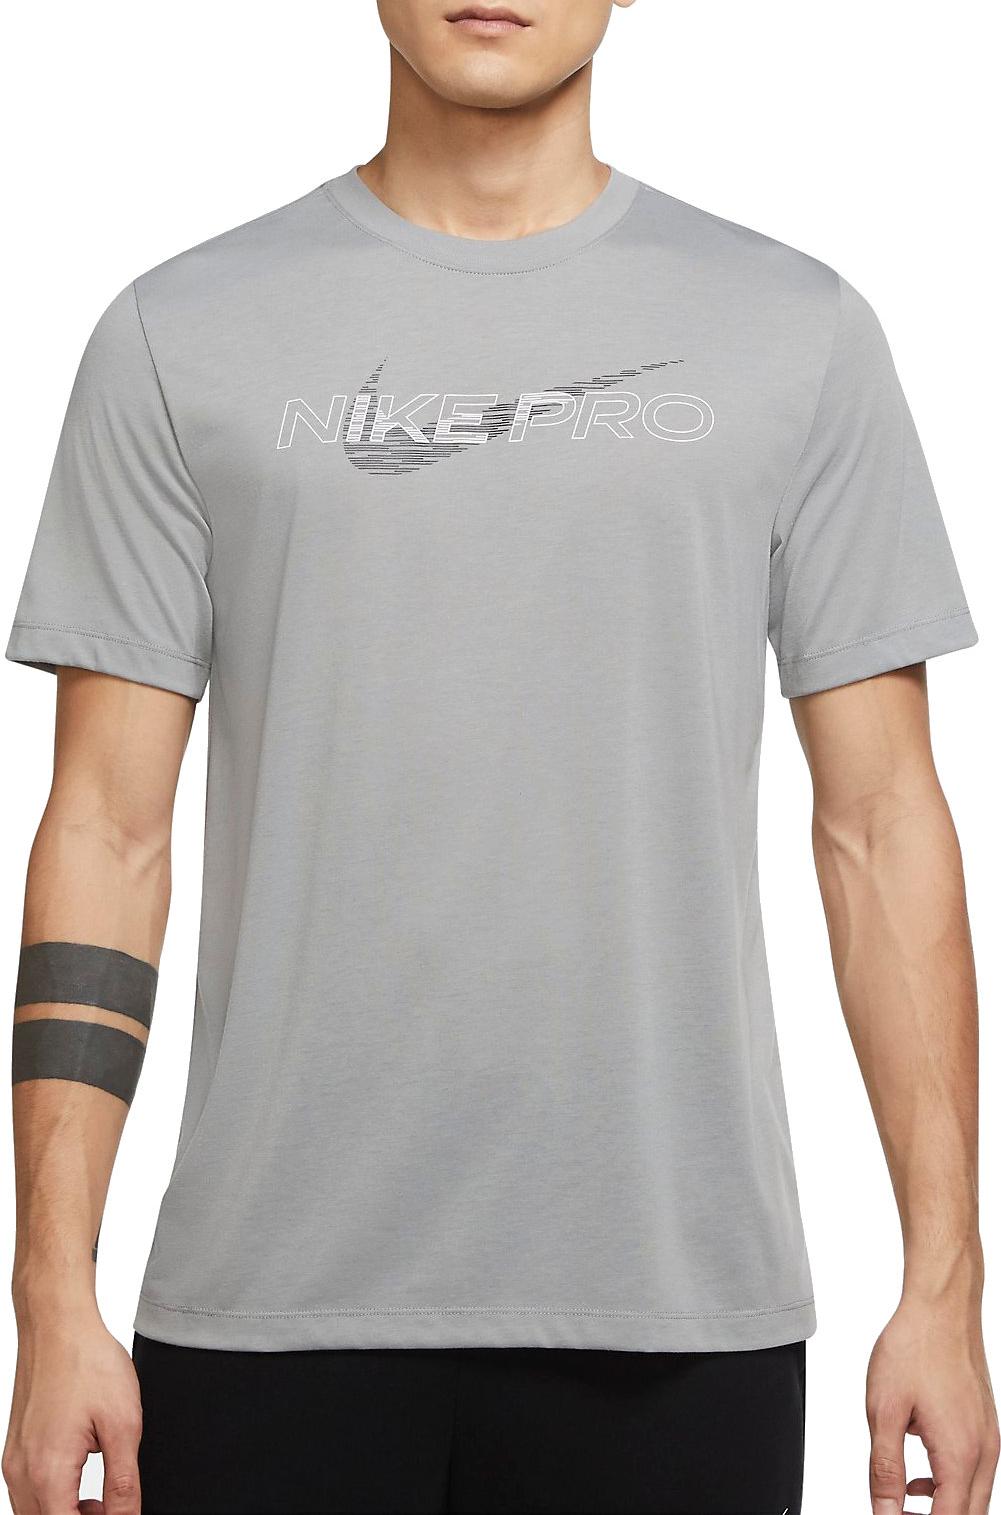 Camiseta Pro s Graphic T-Shirt - Top4Fitness.es